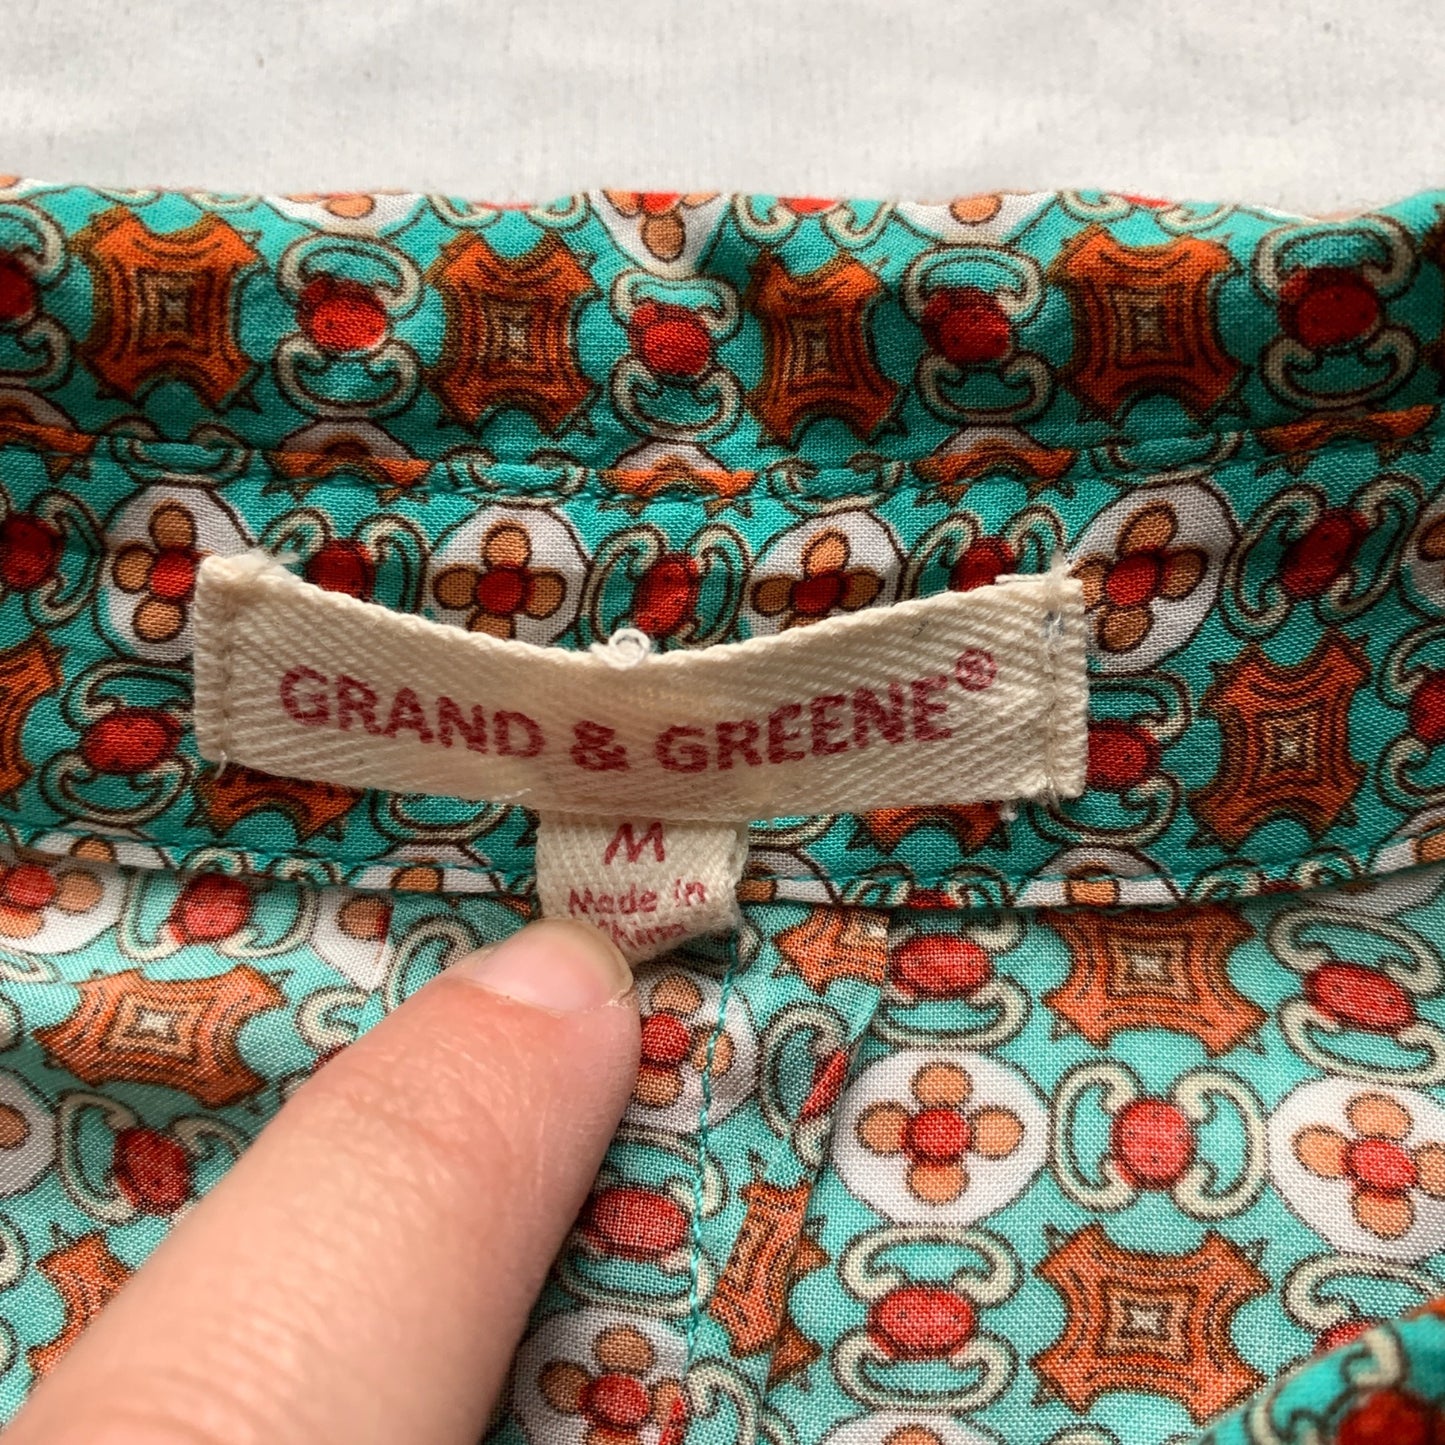 Grand & Greene Teal Orange Medium Button Down